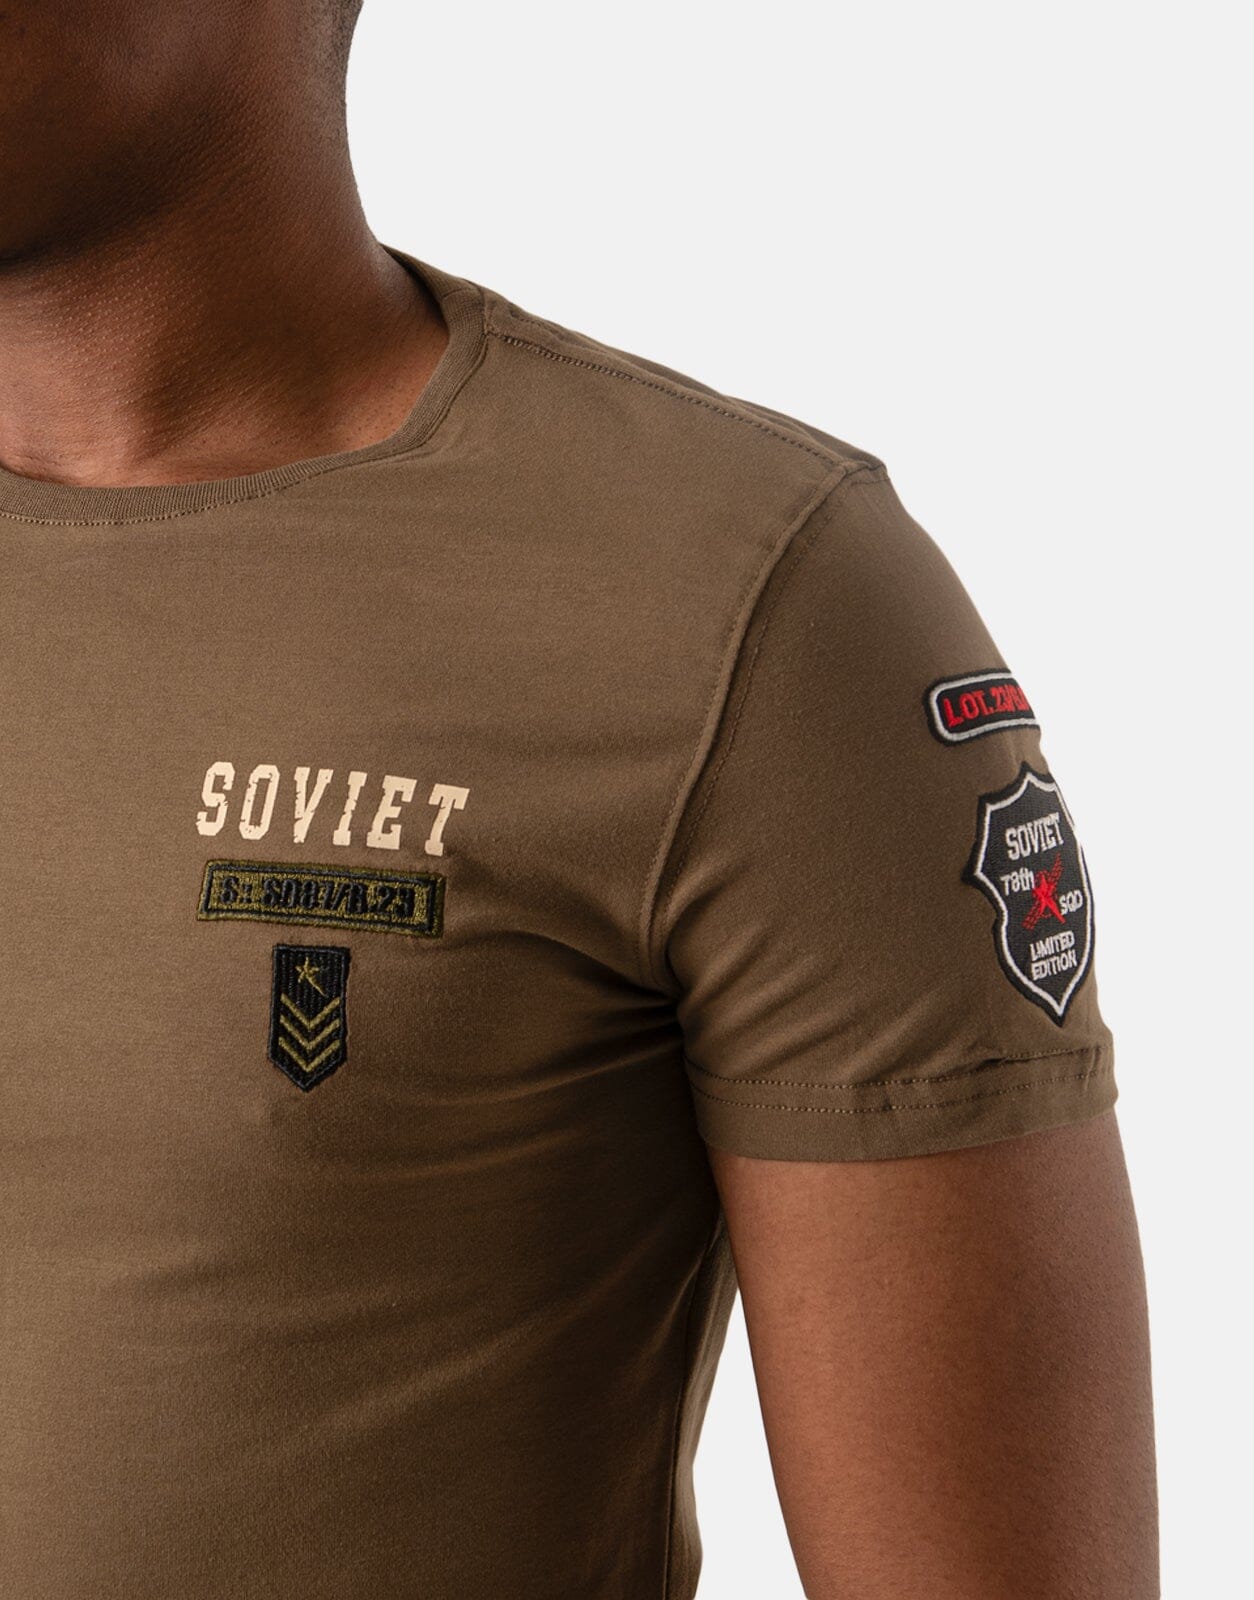 Soviet M Official T-Shirt Olive - Subwear